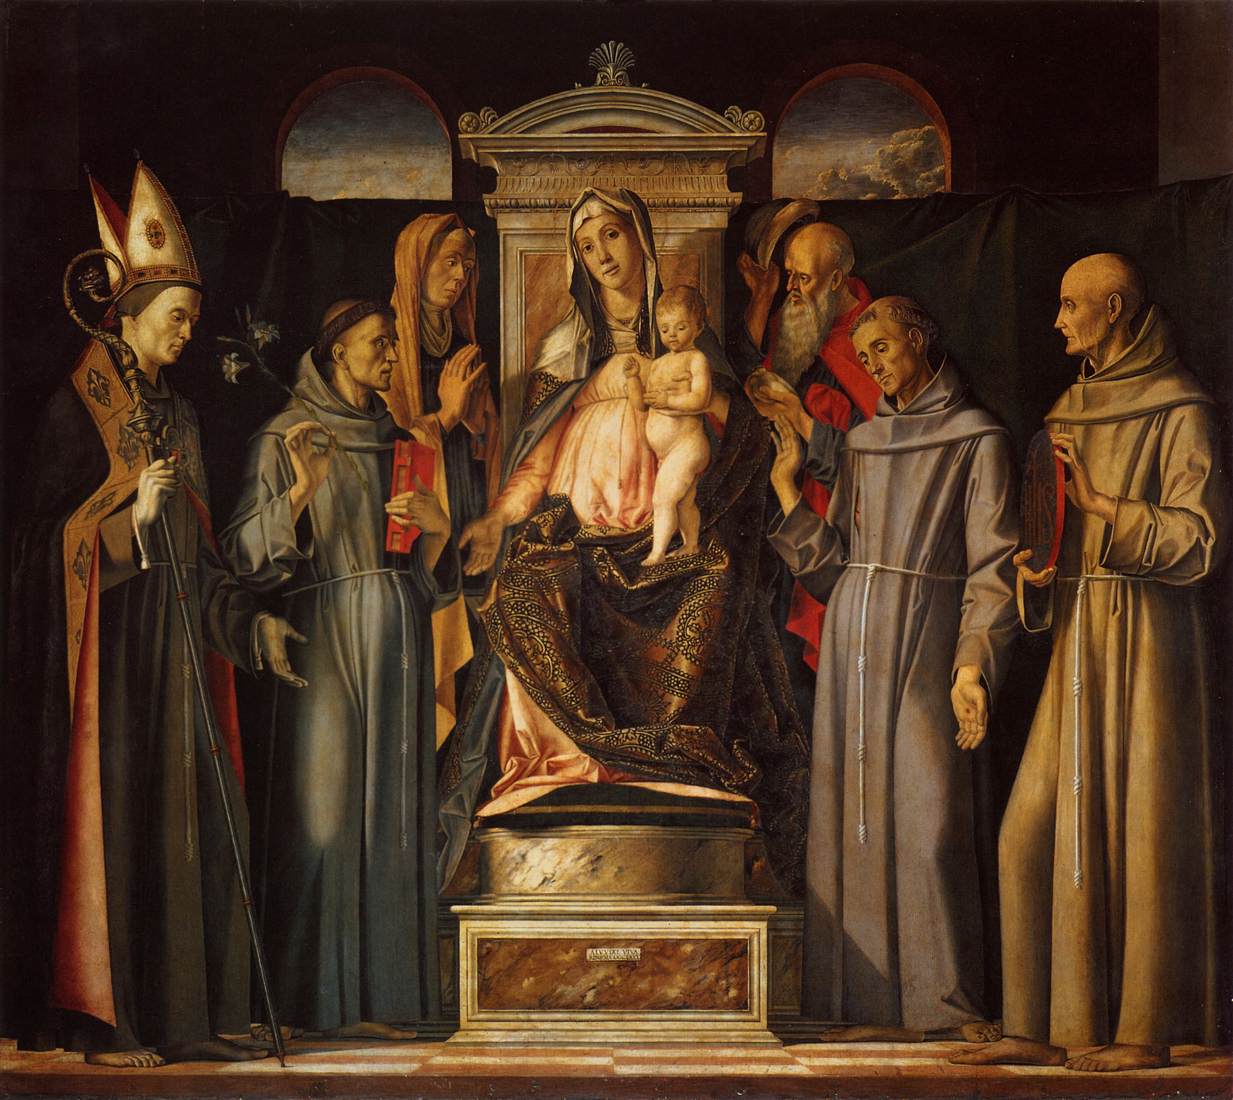 Jungfru och barnet tronade med de heliga (Sacra Converszione)